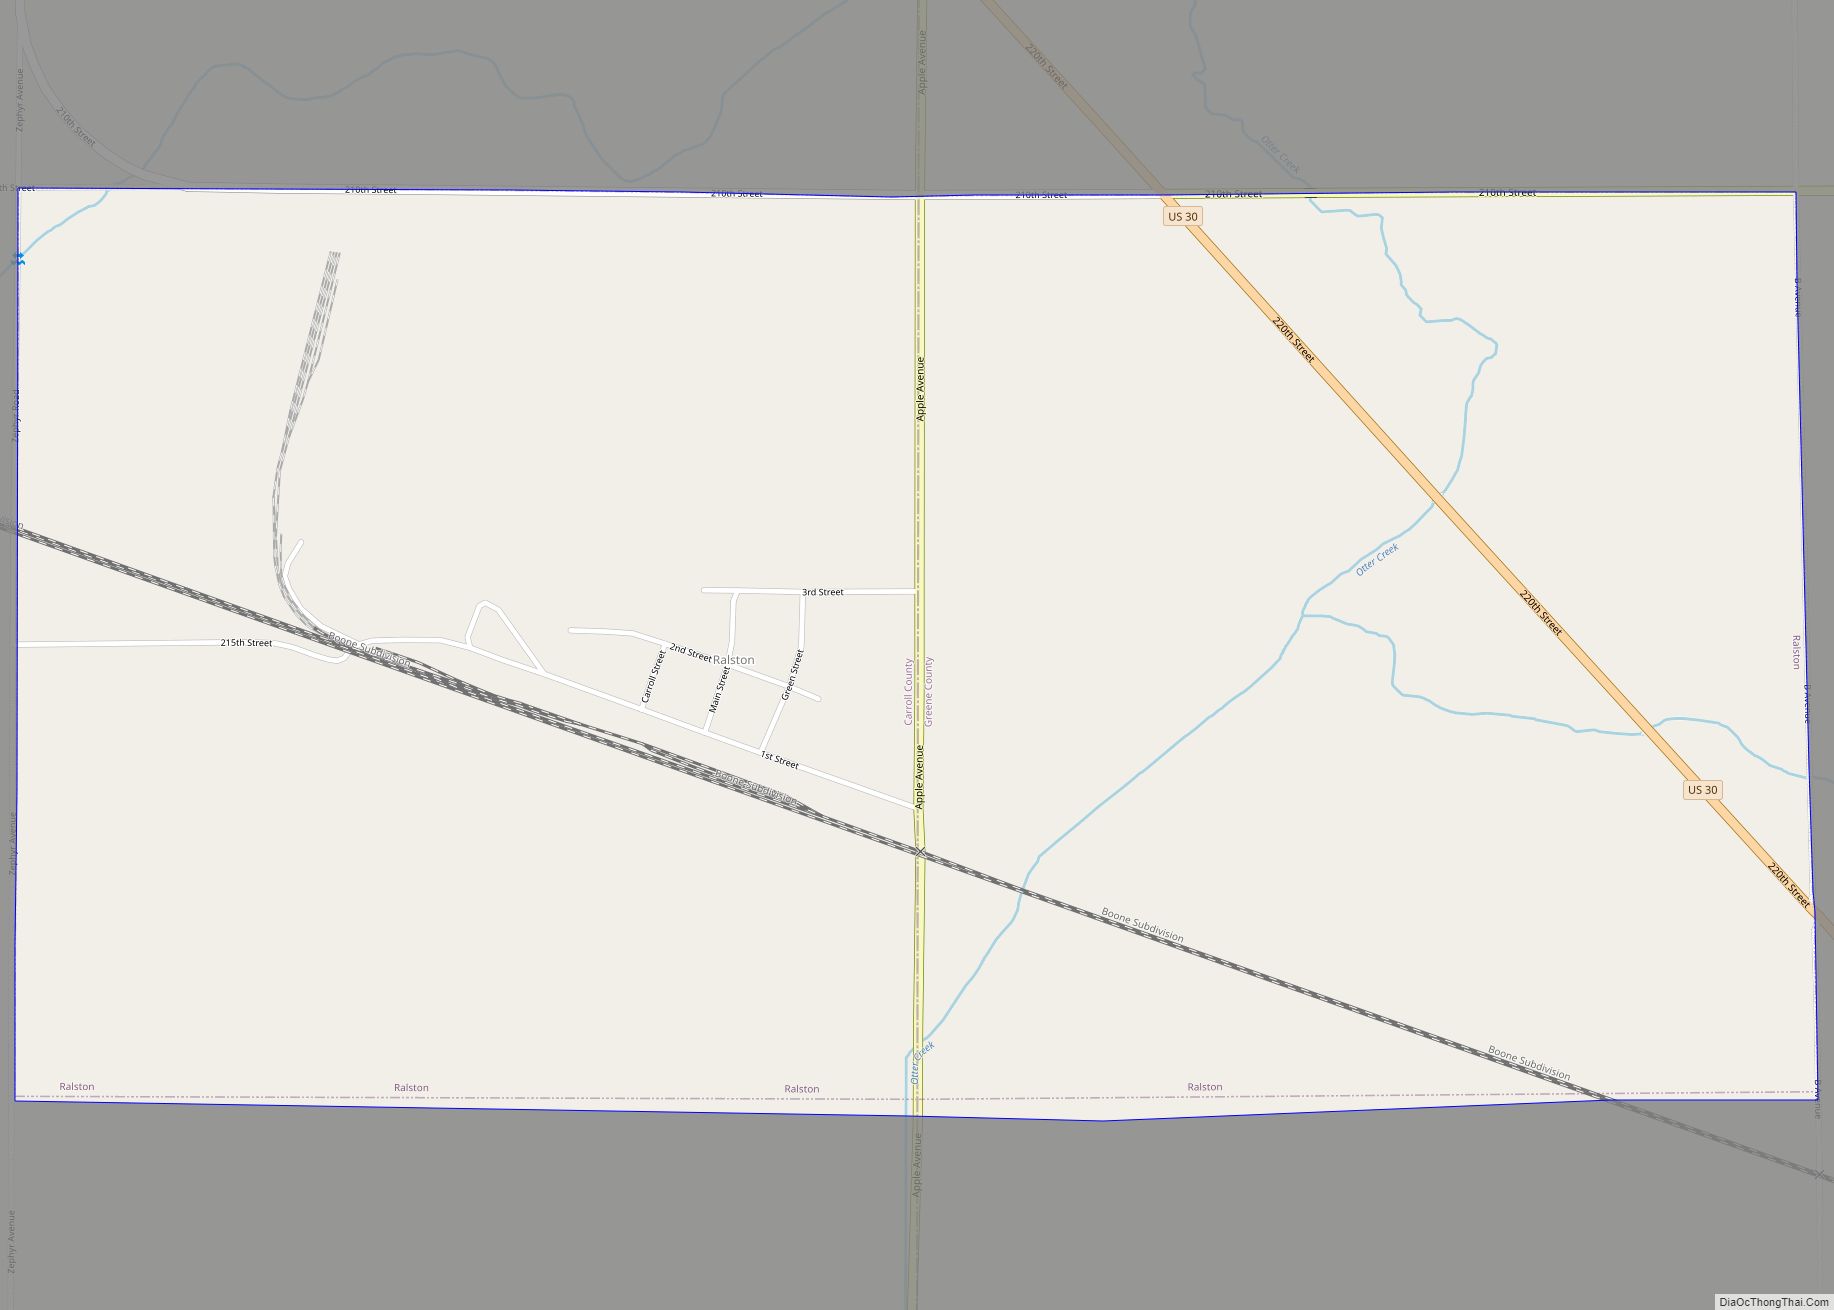 Map of Ralston city